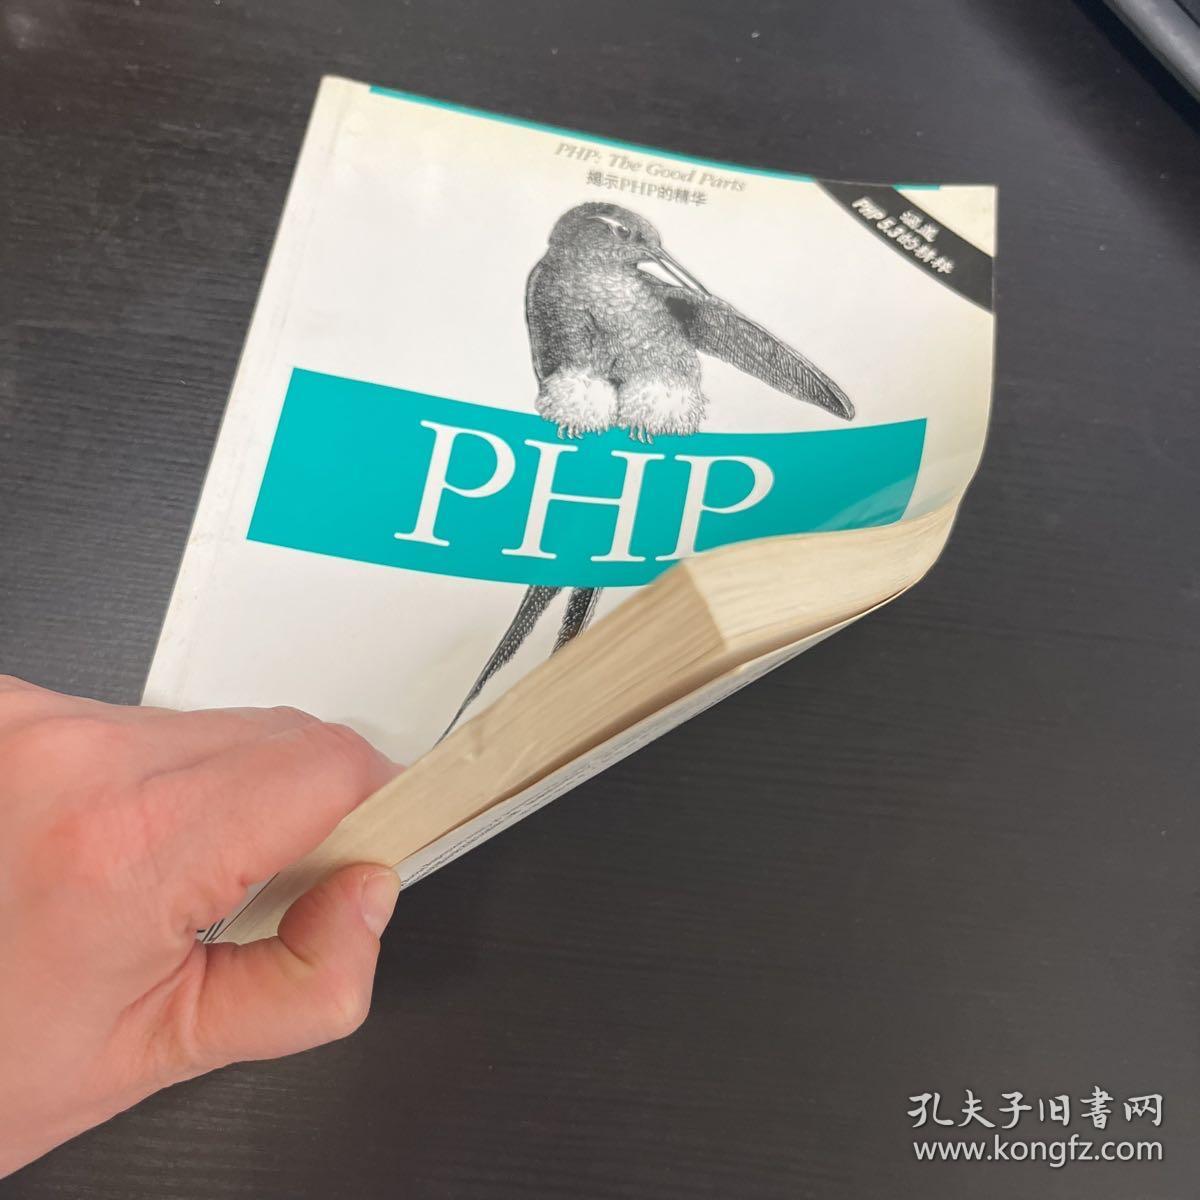 PHP语言精粹